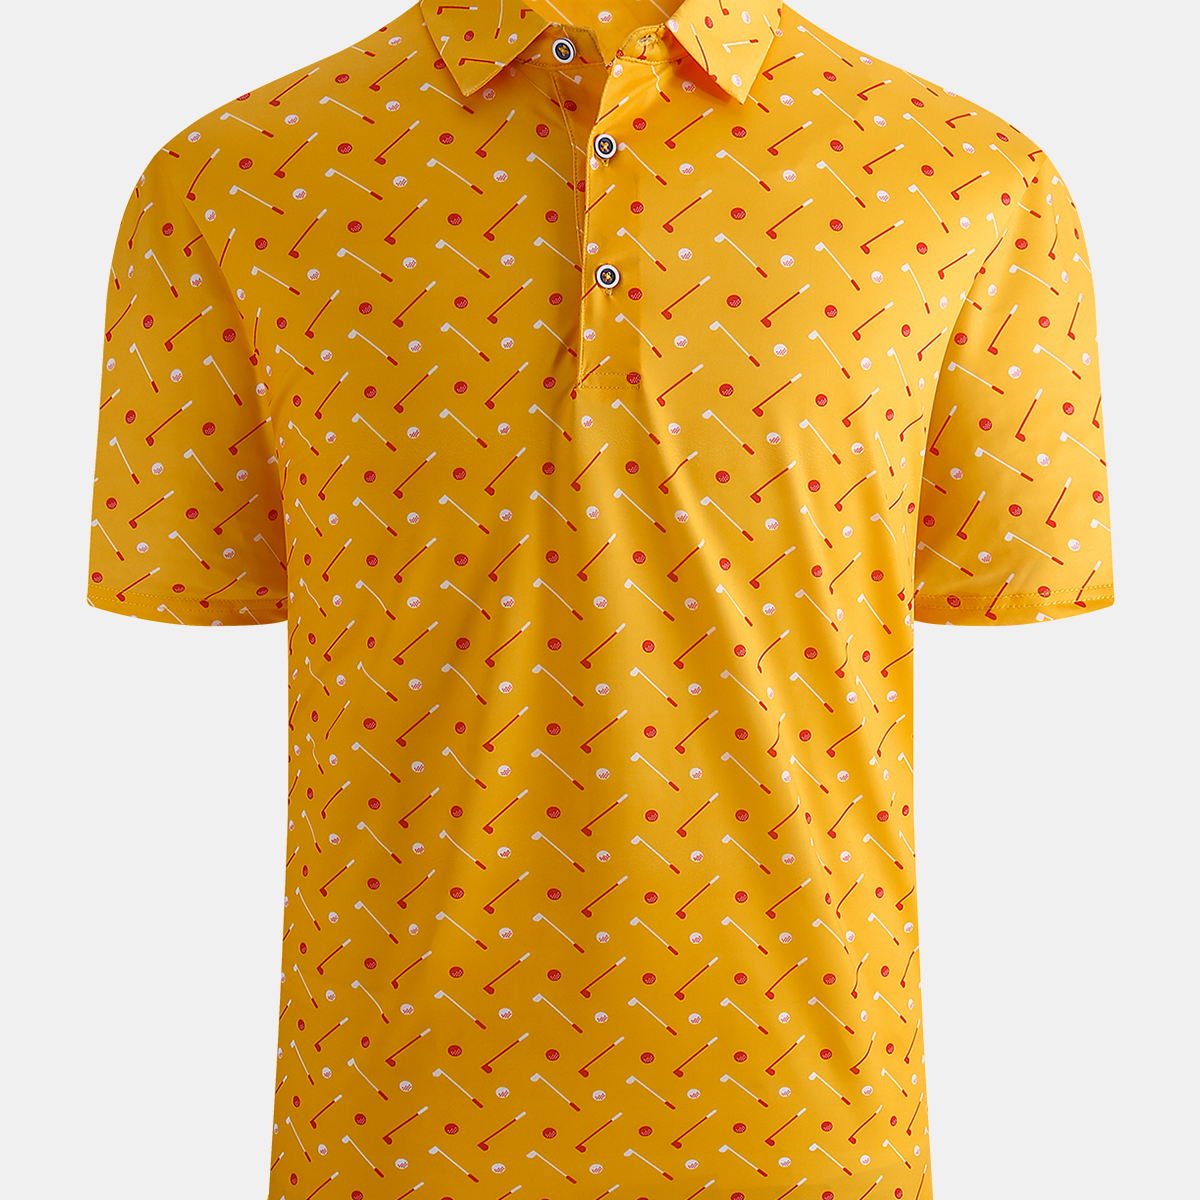 Men's Summer Funny Golf Print Moisture Wicking Performance Polo Short Sleeve Shirt